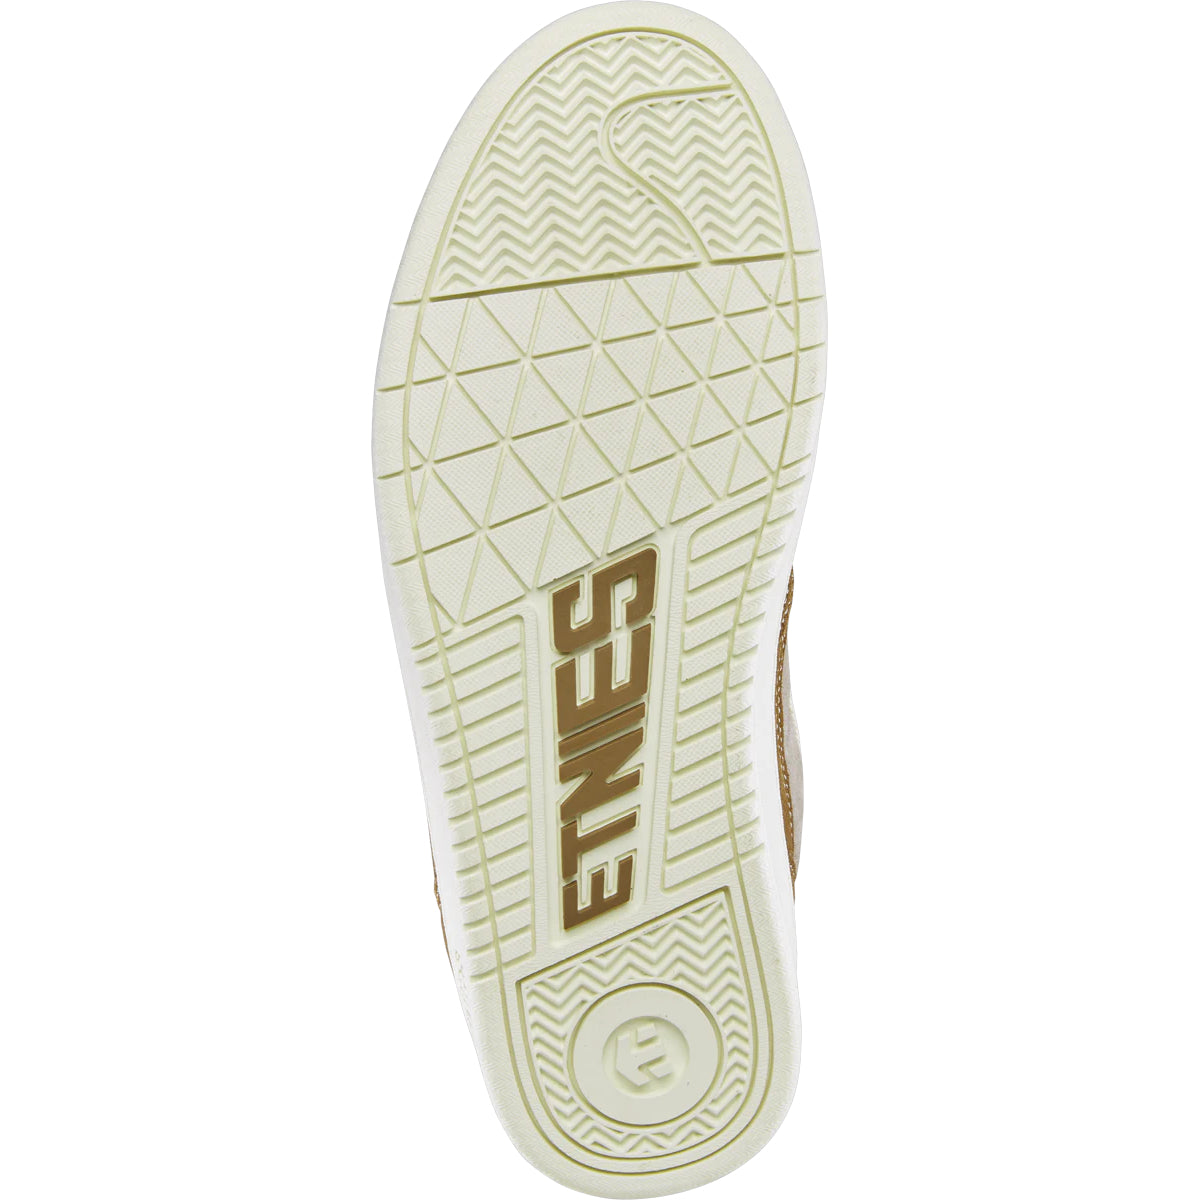 Tan/Brown/Grey Snake Etnies Skate Shoe Bottom